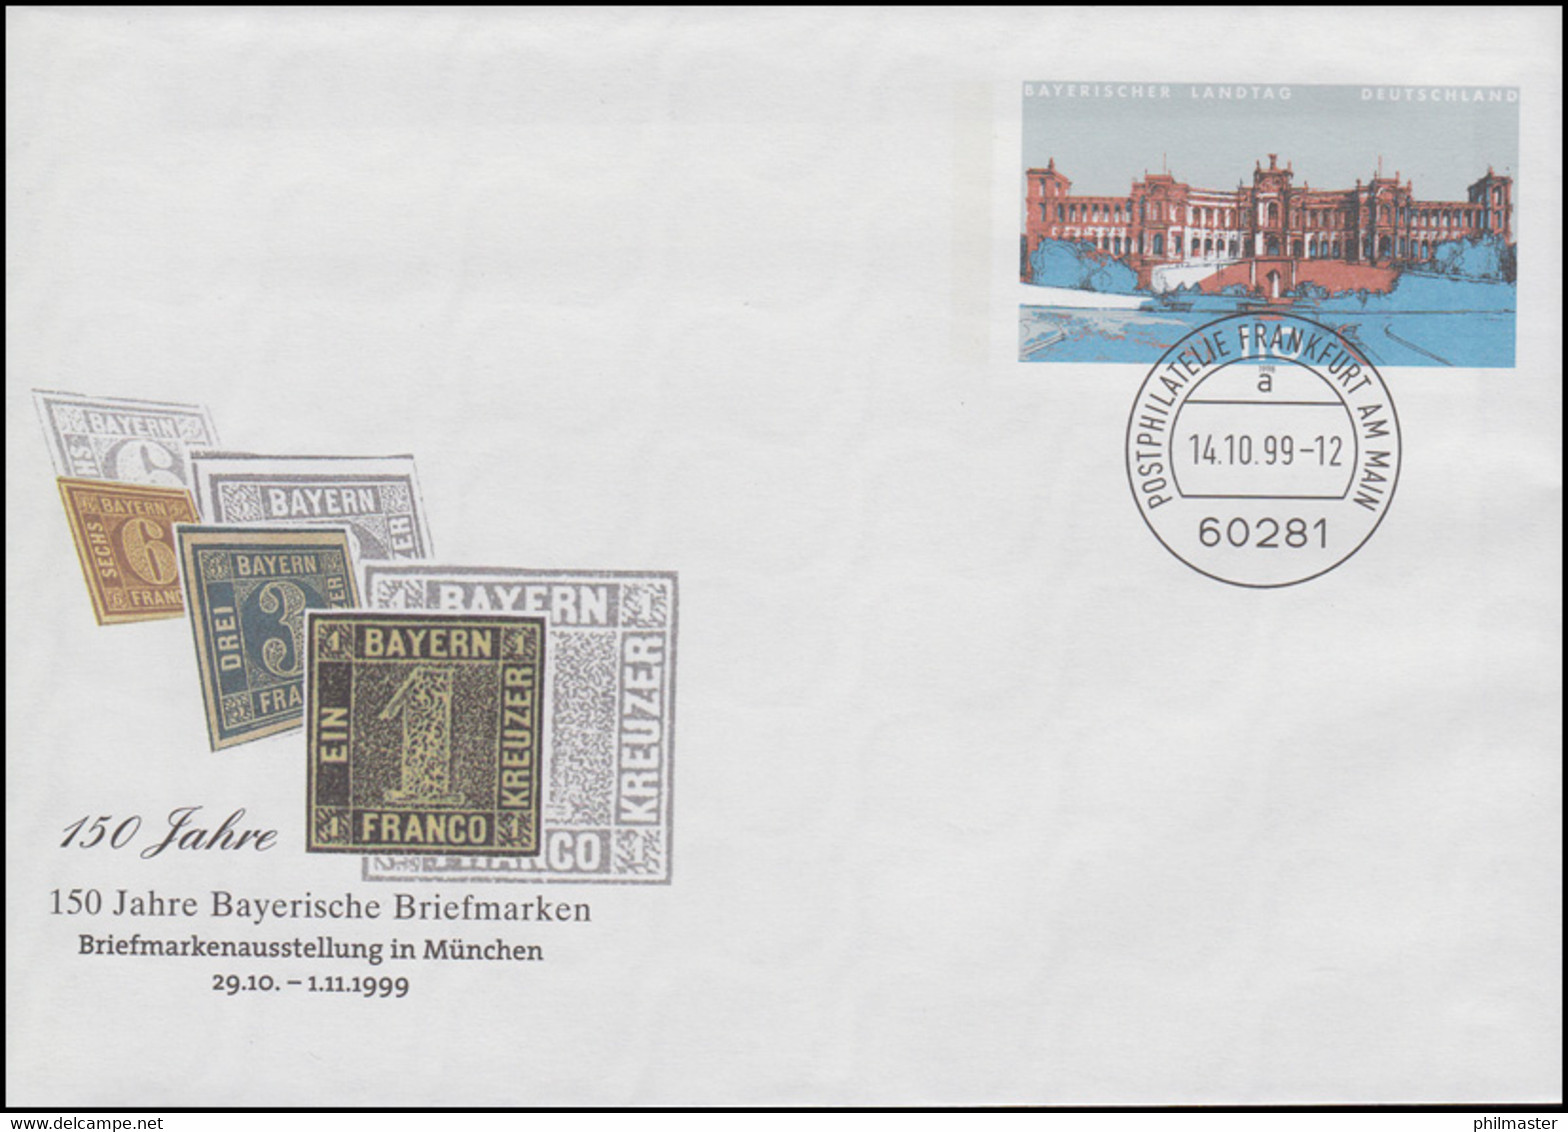 USo 11 Bayerische Briefmarken, VS-O Frankfurt 14.10.99 - Briefomslagen - Ongebruikt